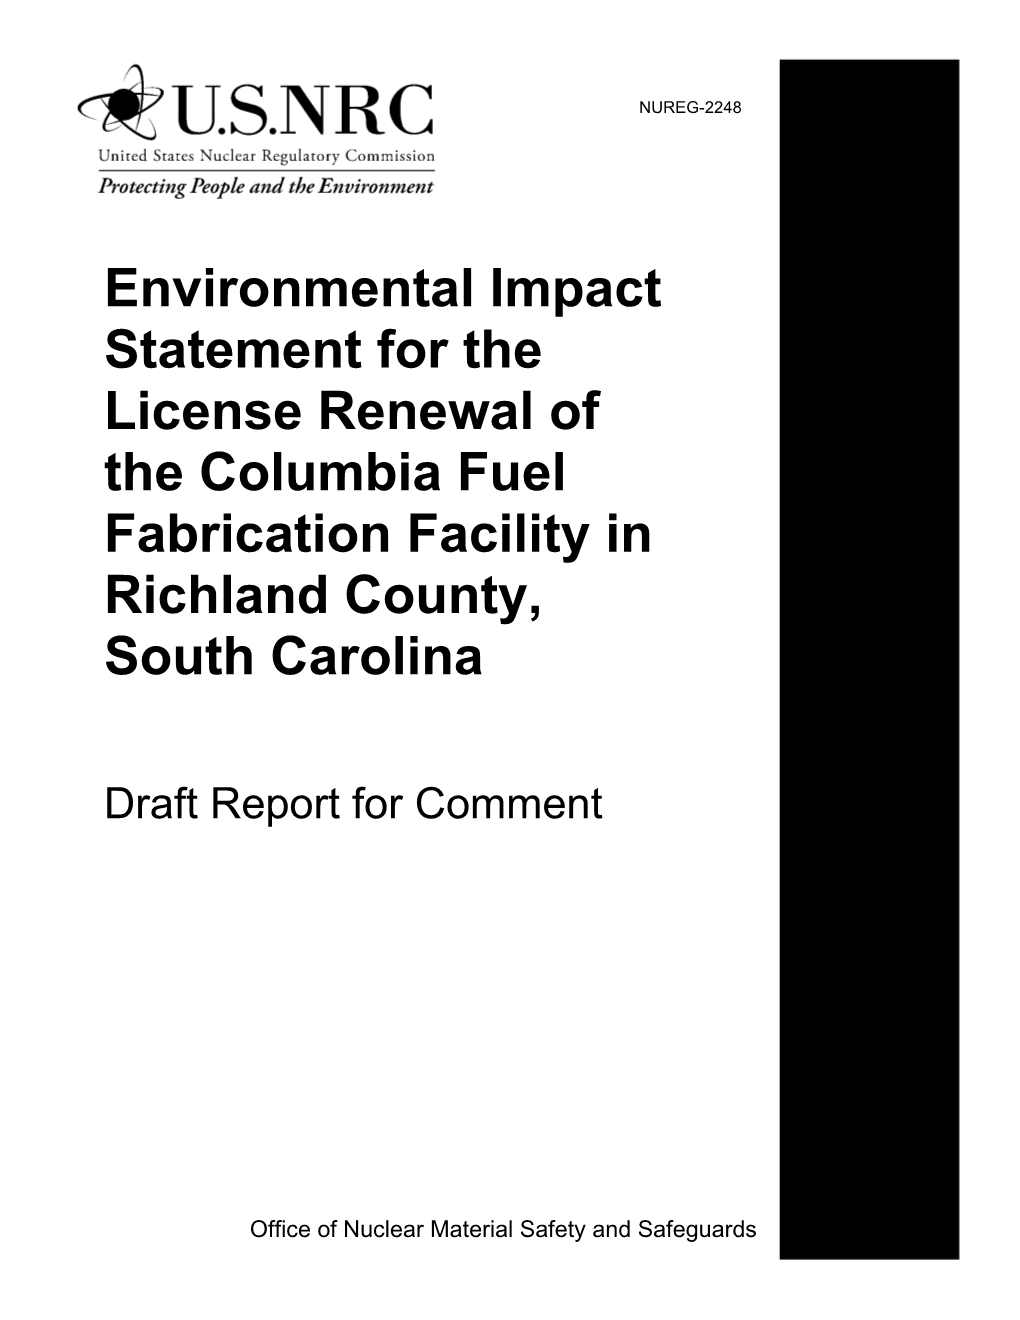 NUREG-2248 DFC, "Environmental Impact Statement for the License